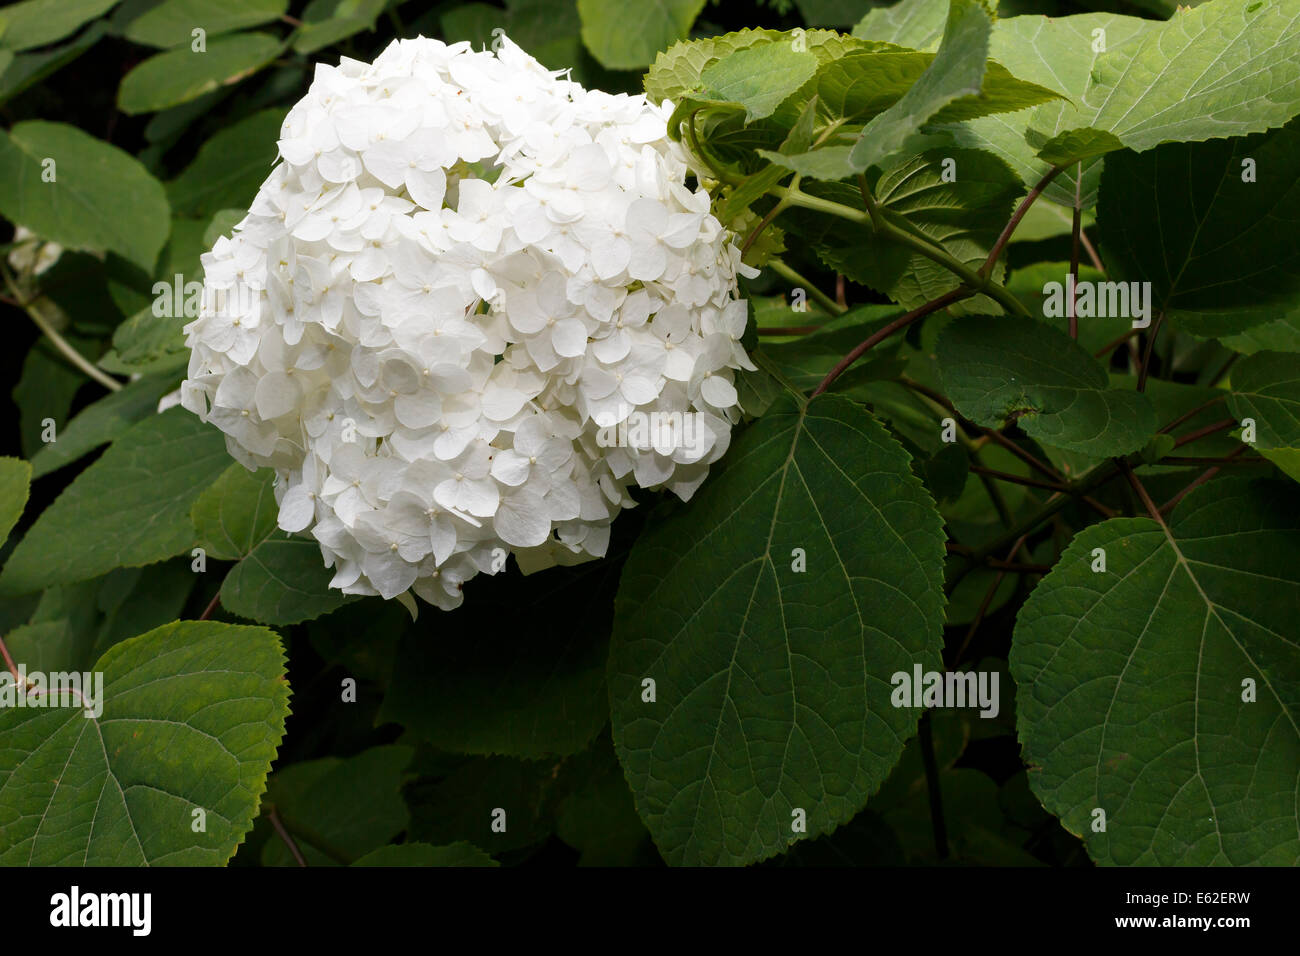 Hydrangea arborescens Annabelle close-up Stock Photo